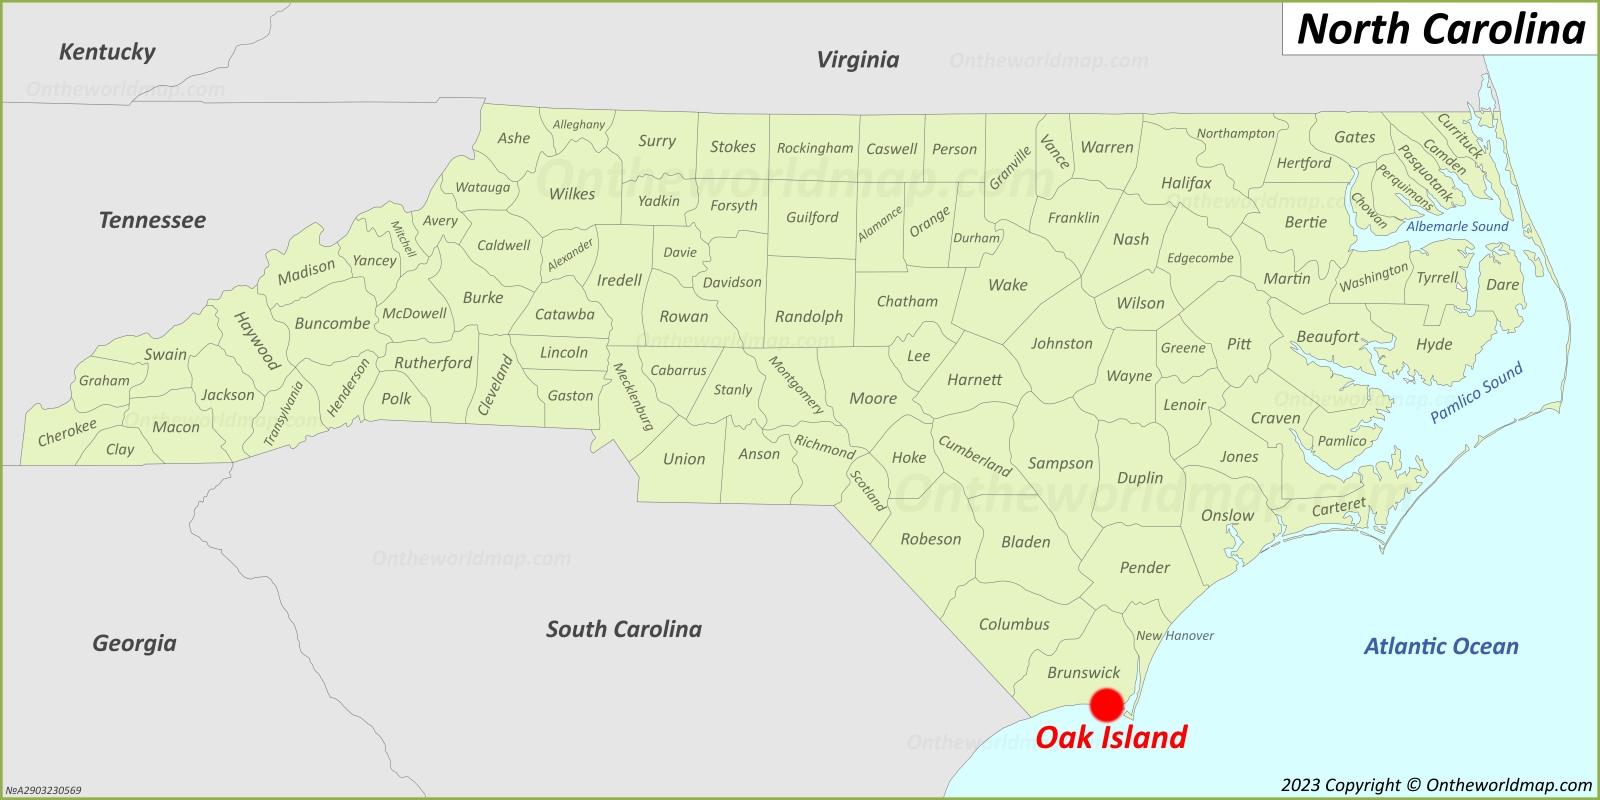 Oak Island Location On The North Carolina Map